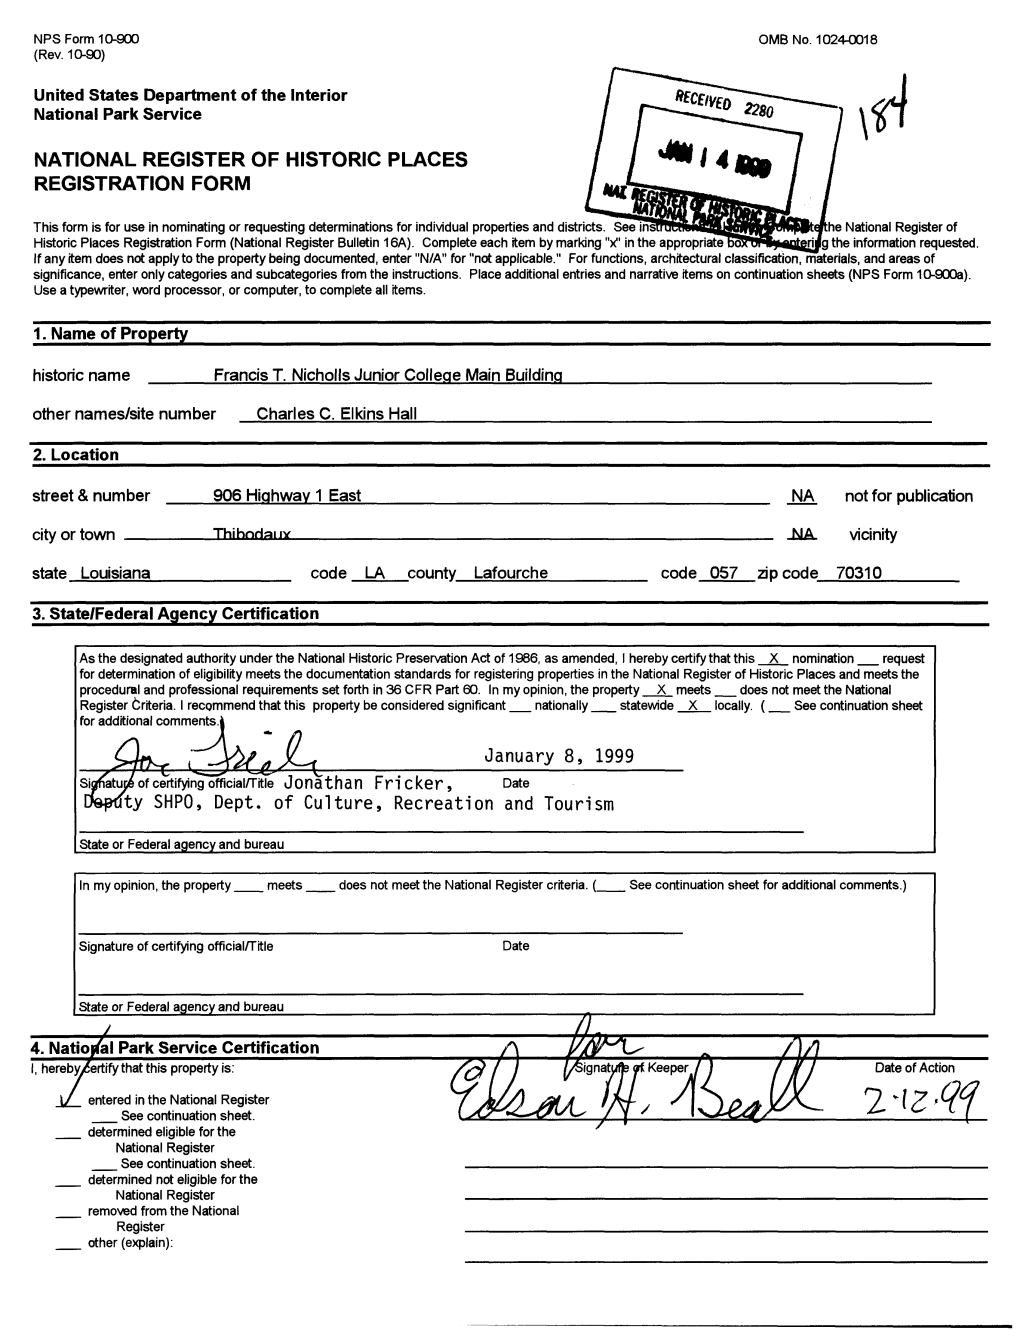 National Register of Historic Places Registration Form Q